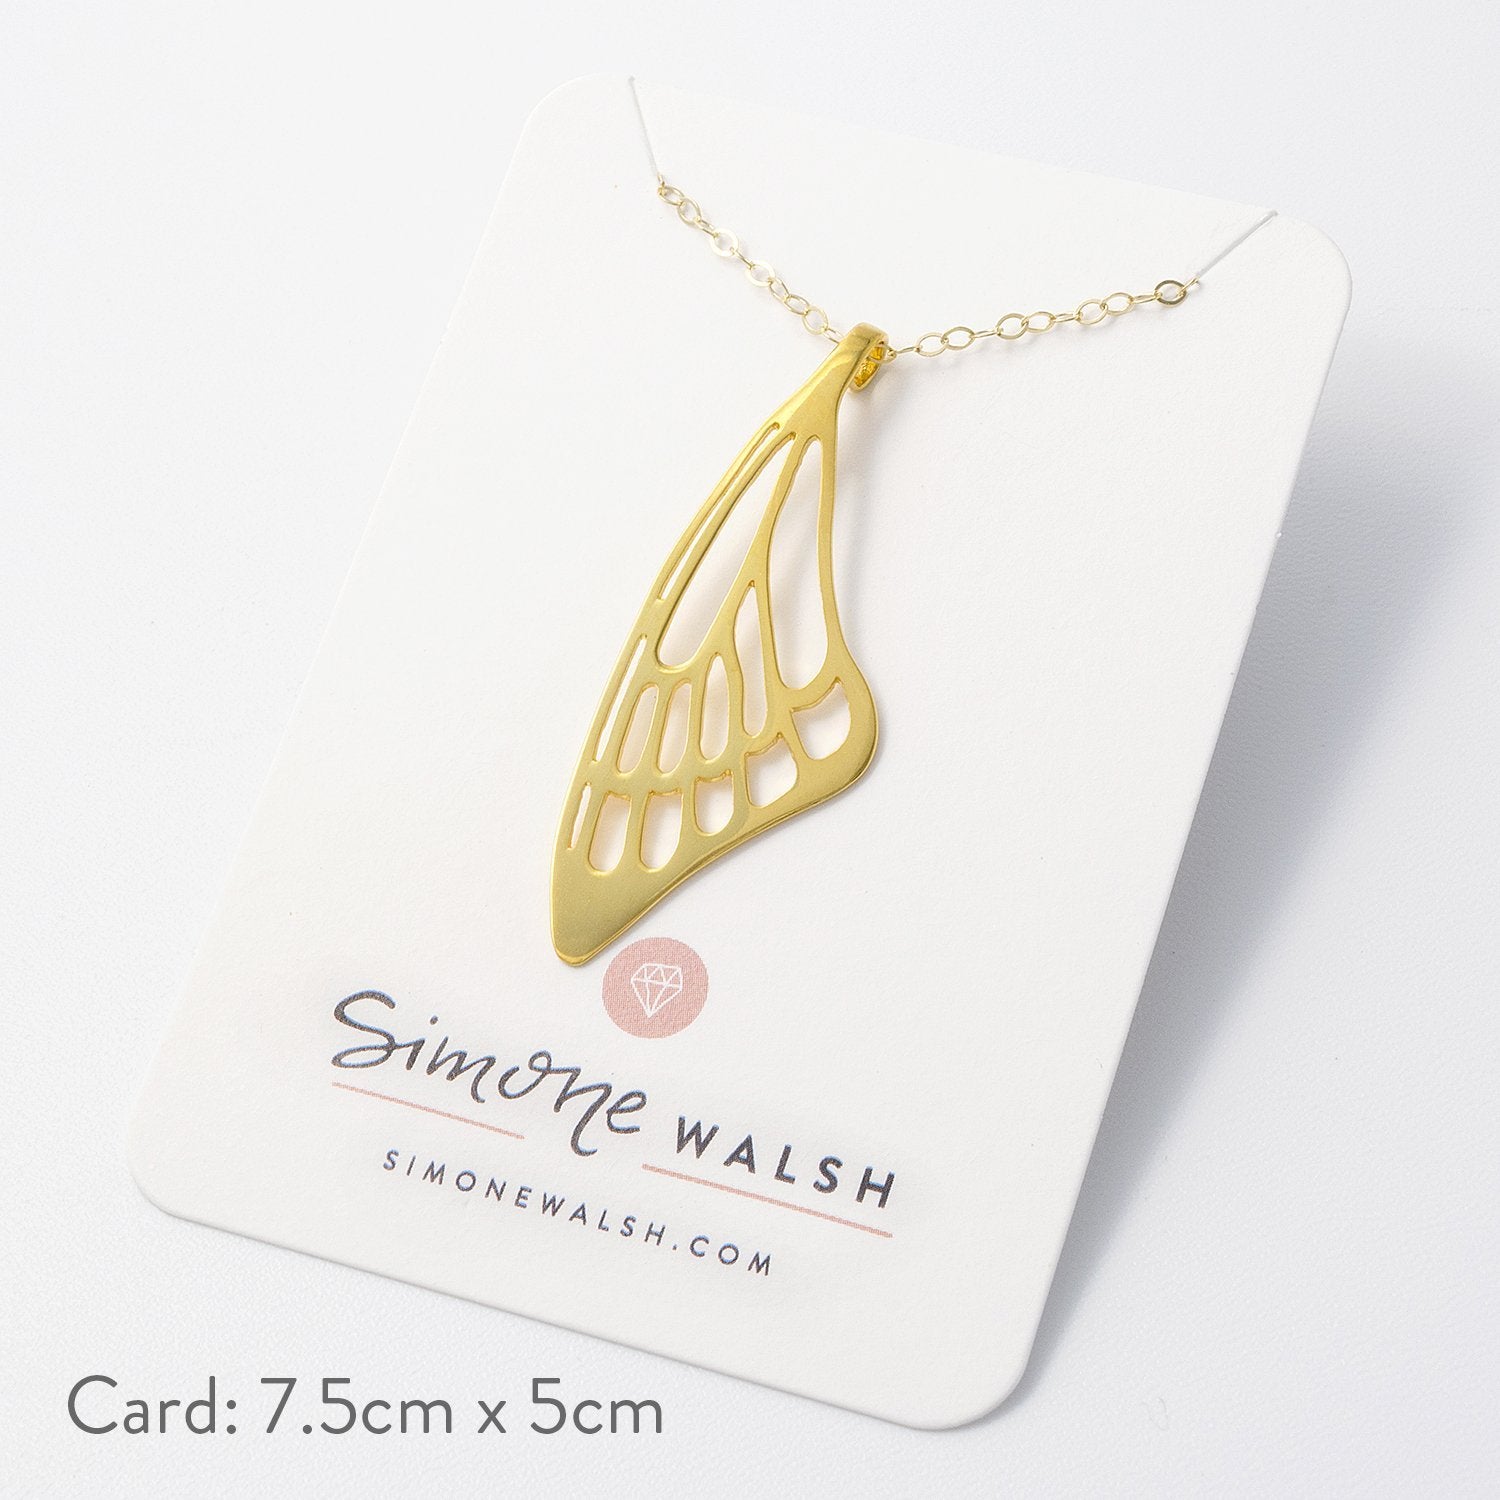 Butterfly wing pendant in gold - Simone Walsh Jewellery Australia